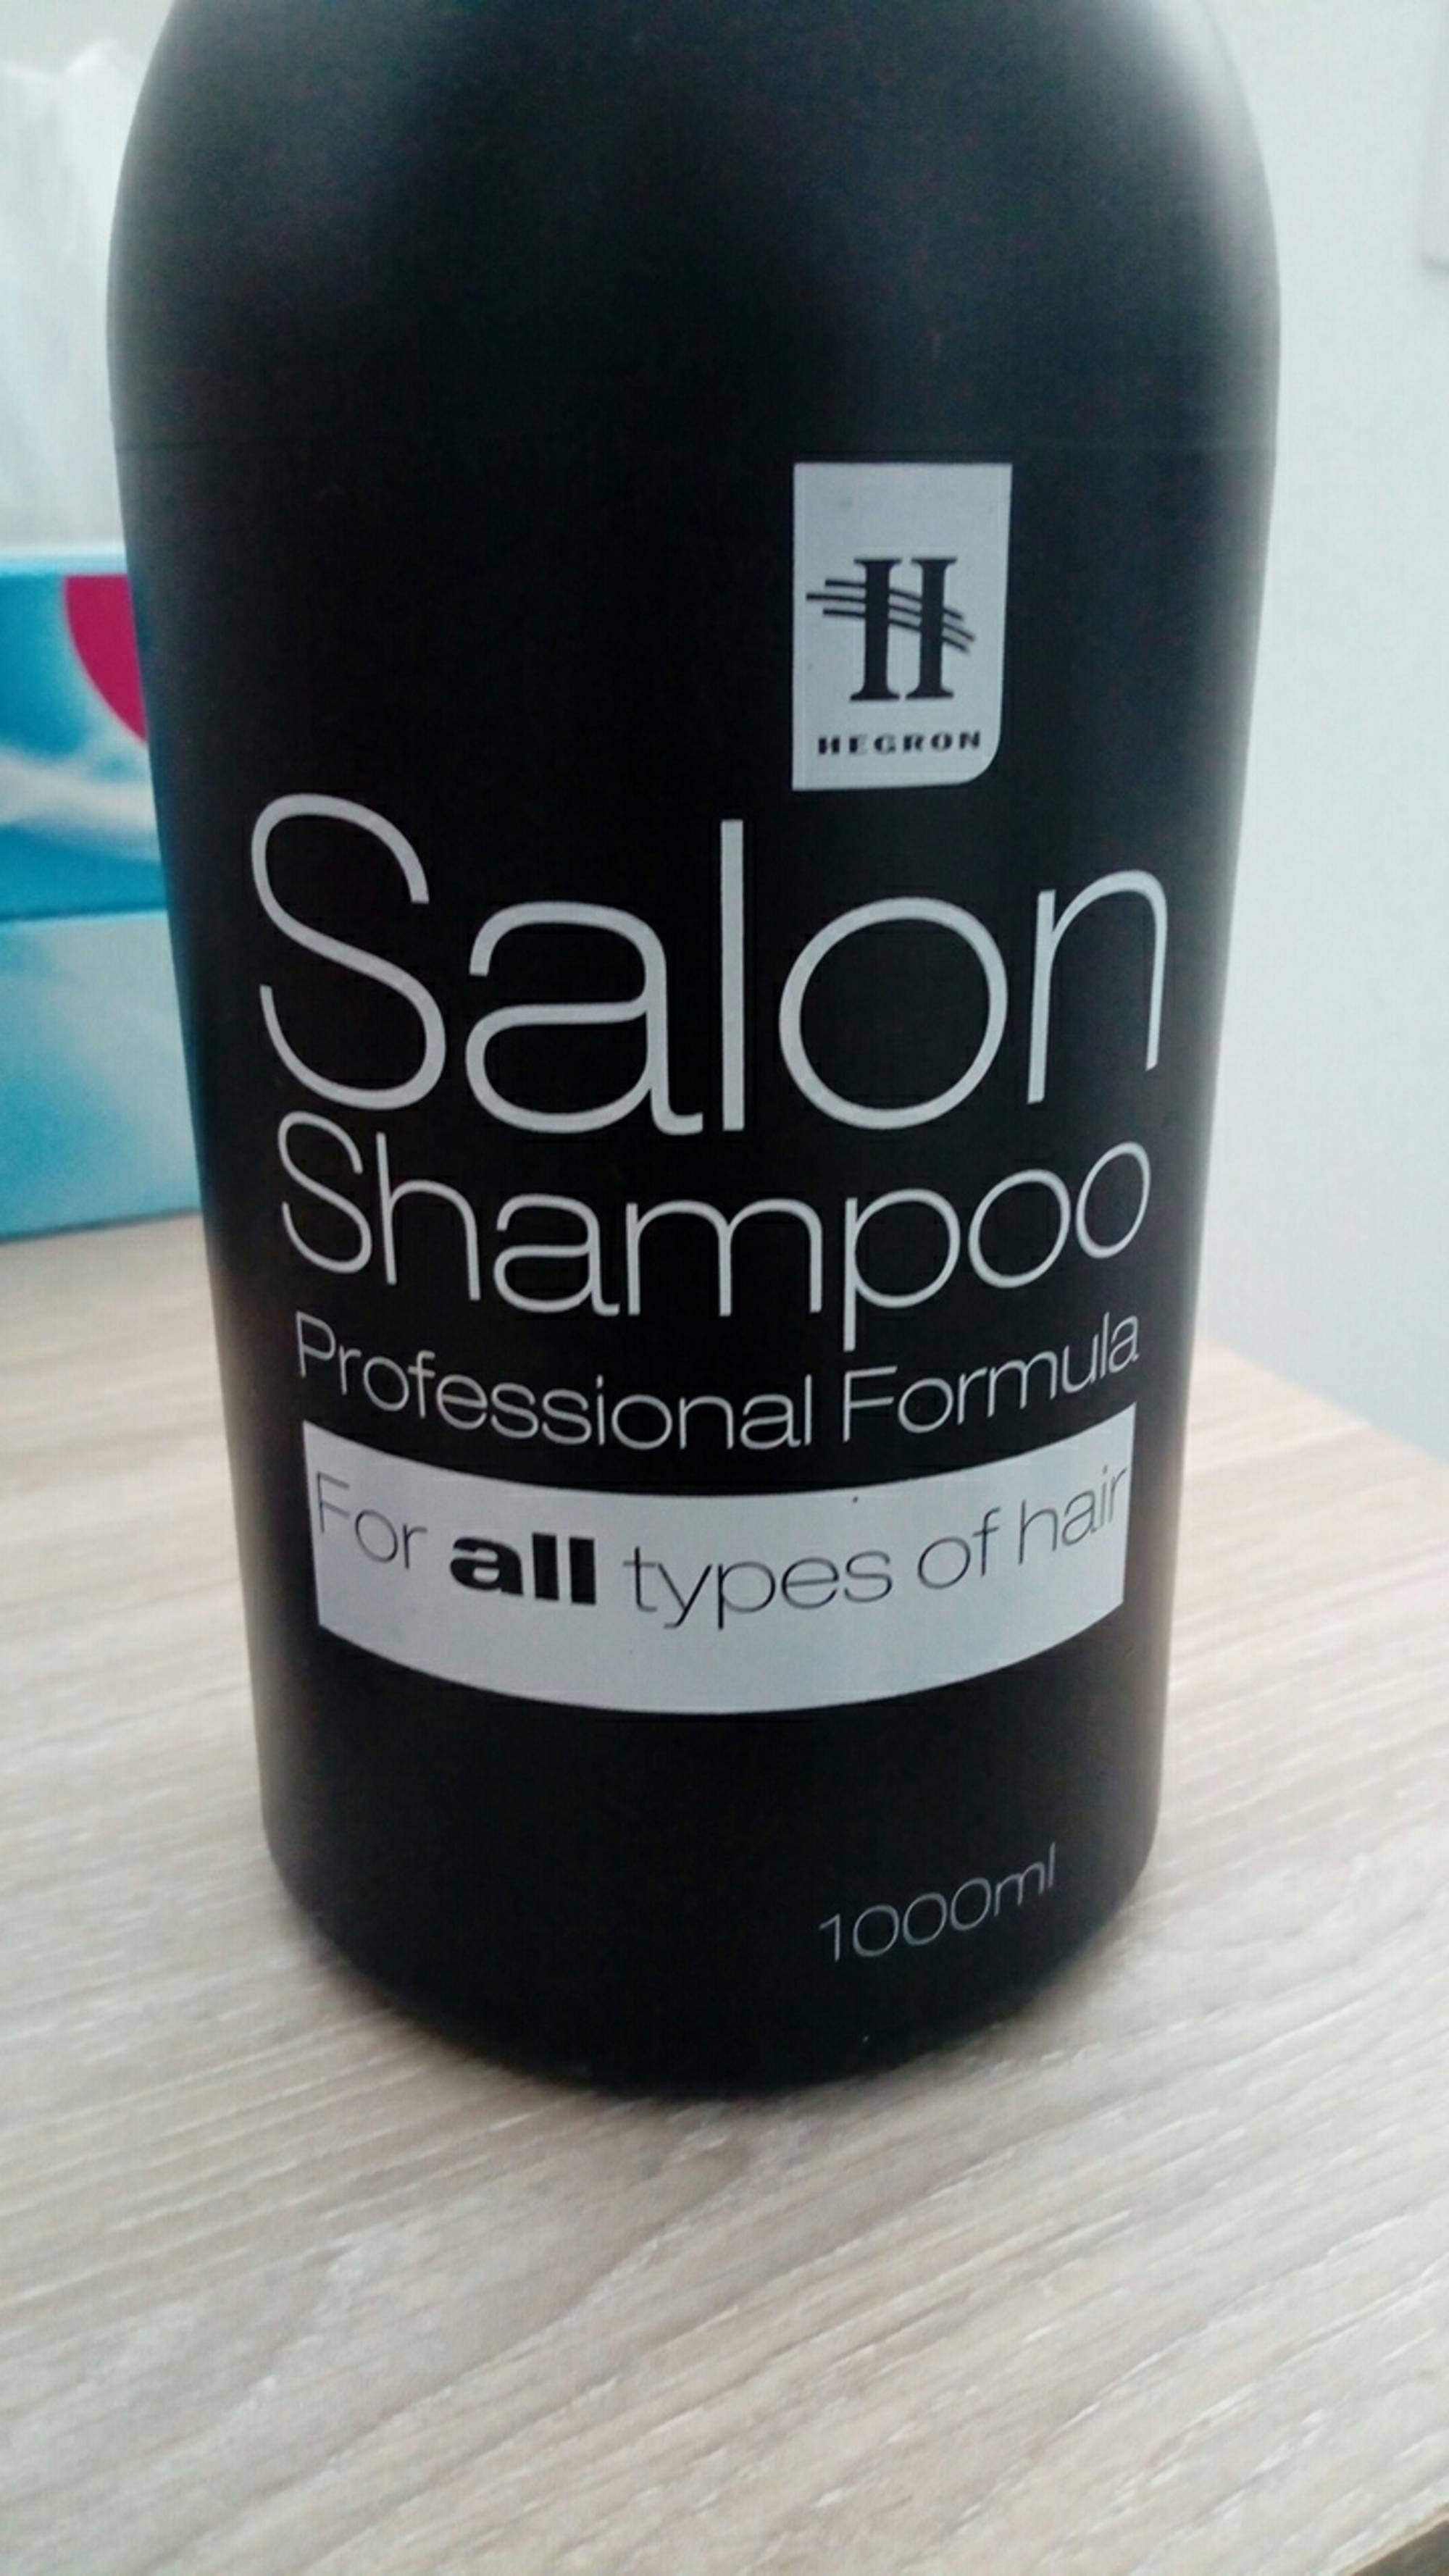 HEGRON - Salon - Shampoo professional formula